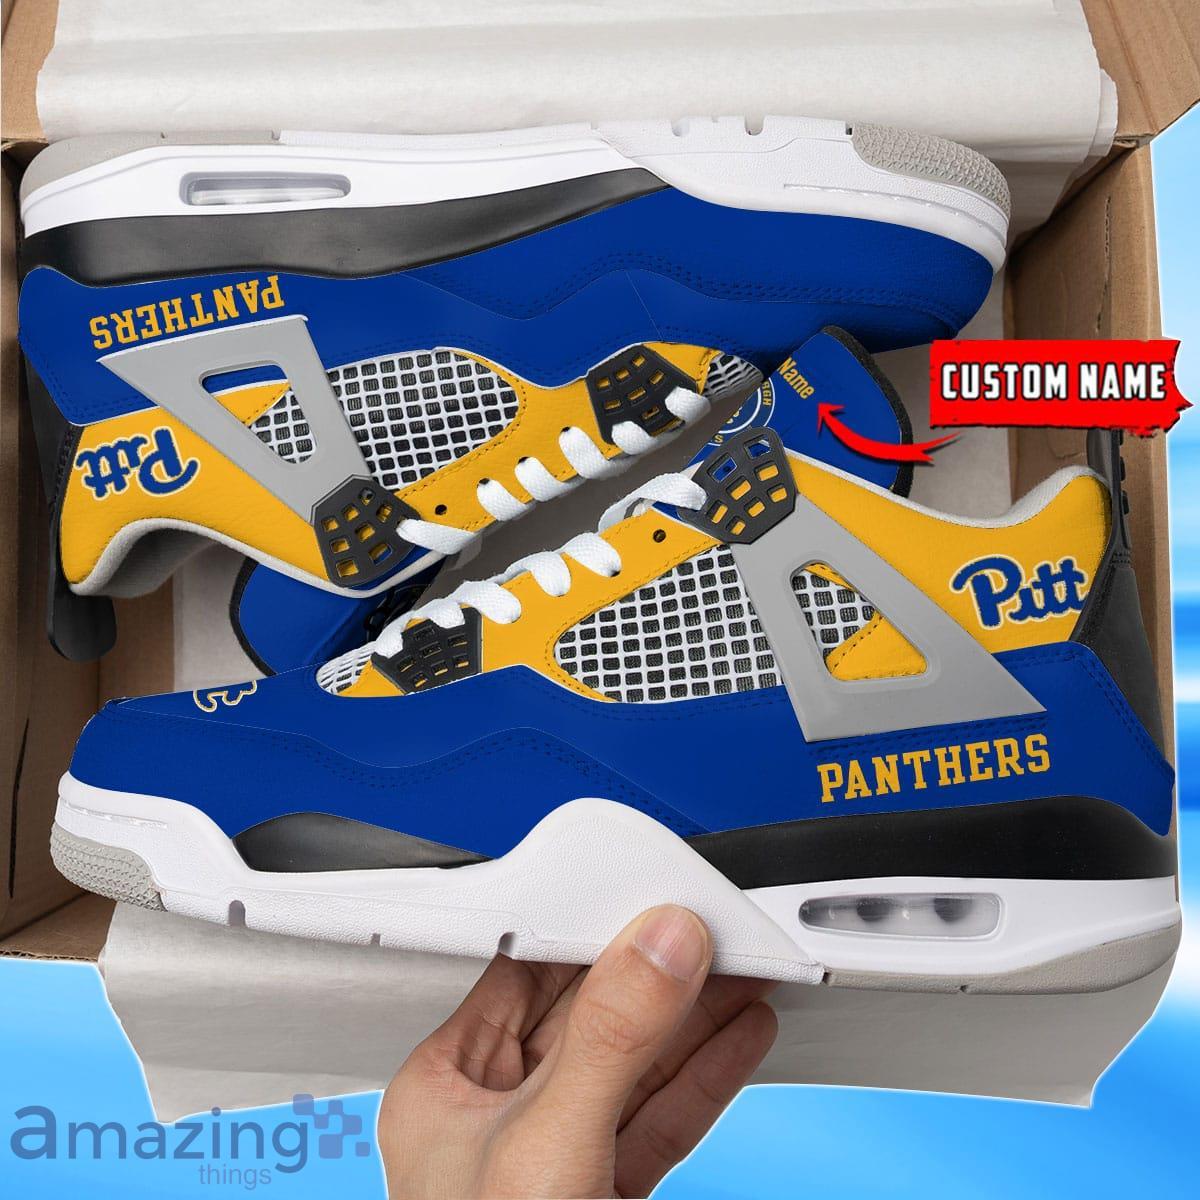 Pittsburgh Panthers Custom Name Air Jordan 4 Shoes Impressive Gift For Men Women Product Photo 1